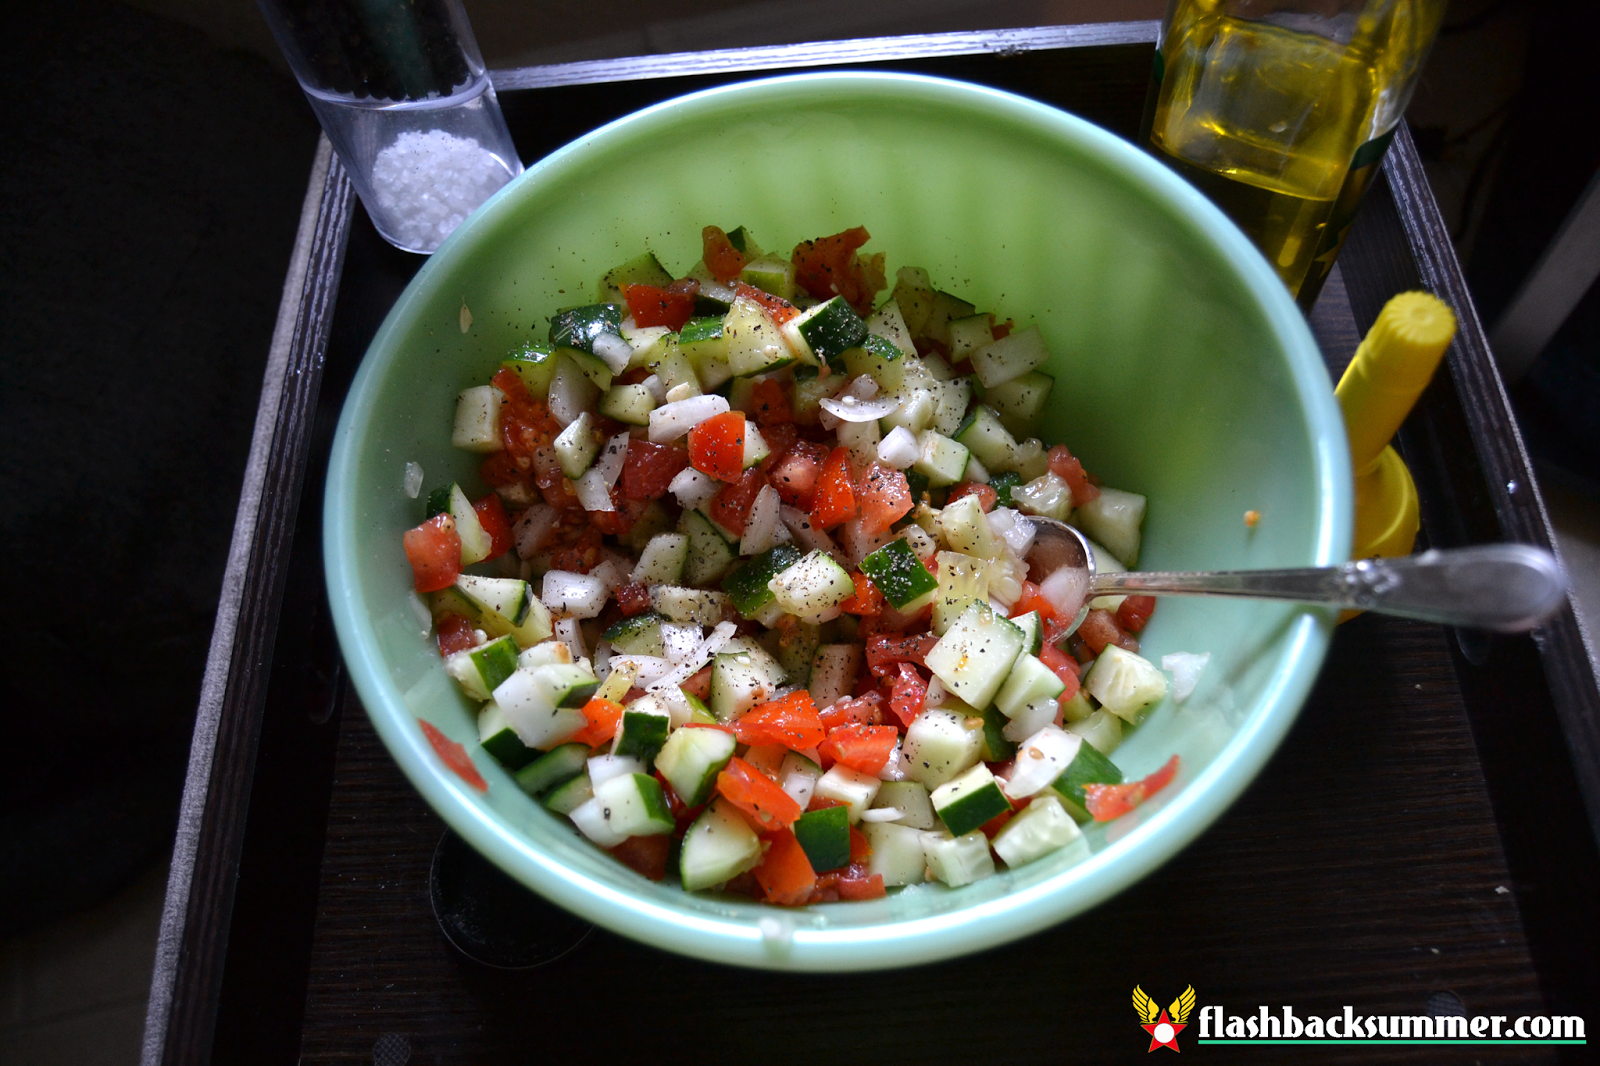 Flashback Summer: Family Recipe - Egyptian Salad